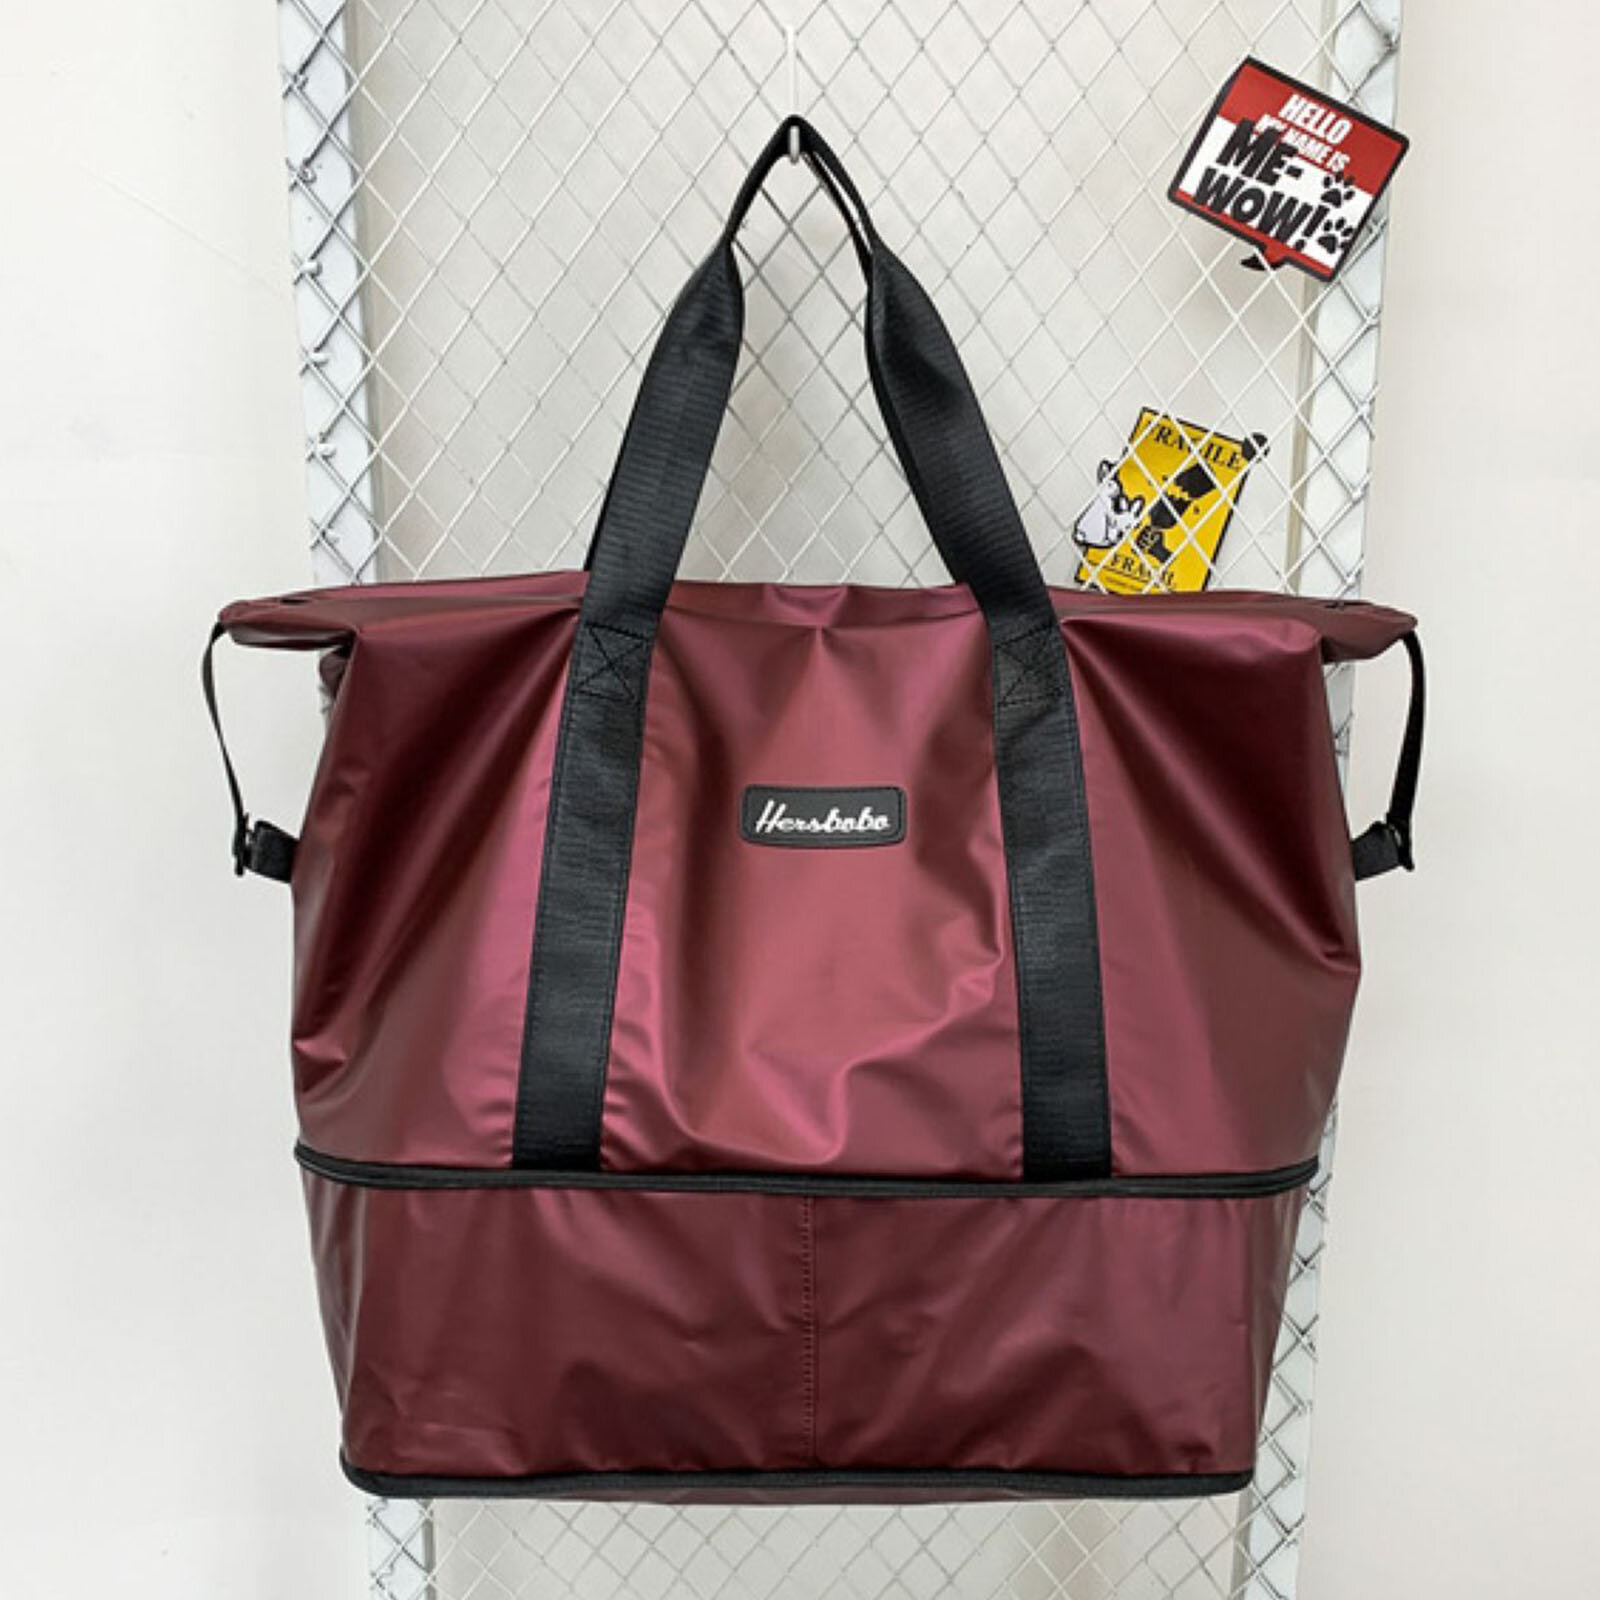 Unisexual Dacron Casual Large Capacity Travel Bag Waterproof Multi-functional Gym Bag